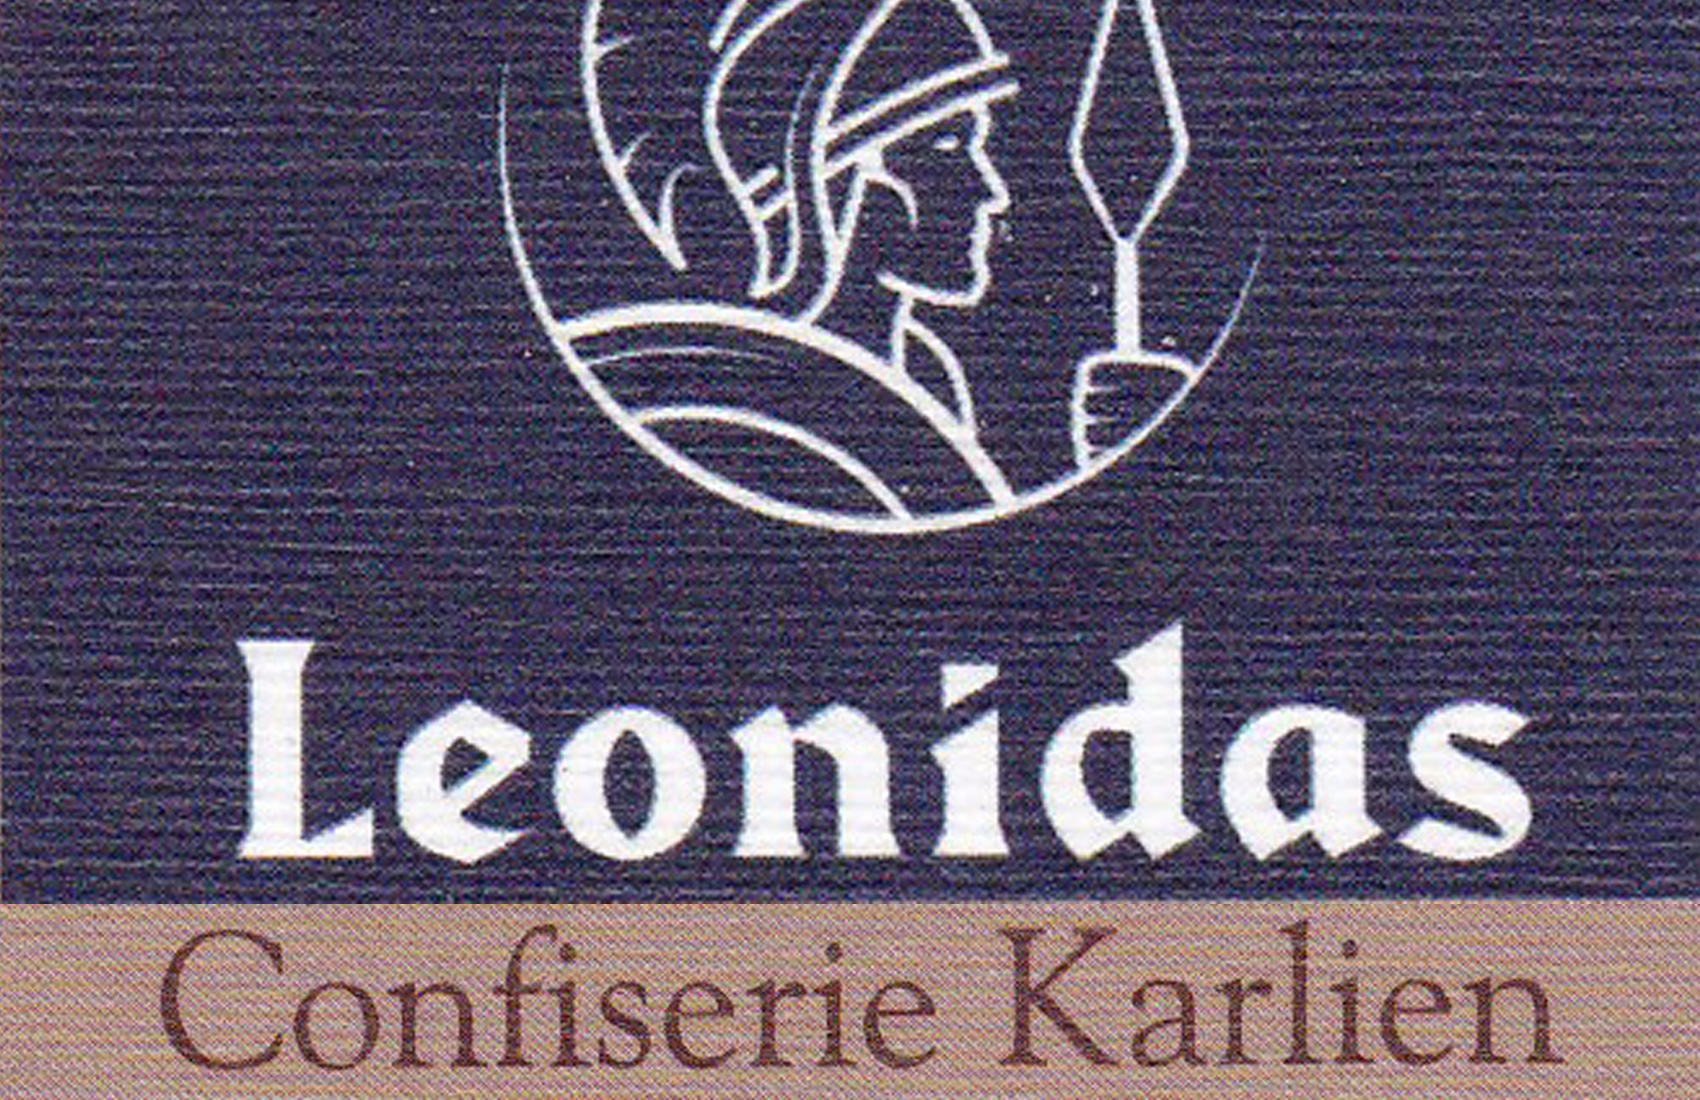 Leonidas - Confiserie Karlien